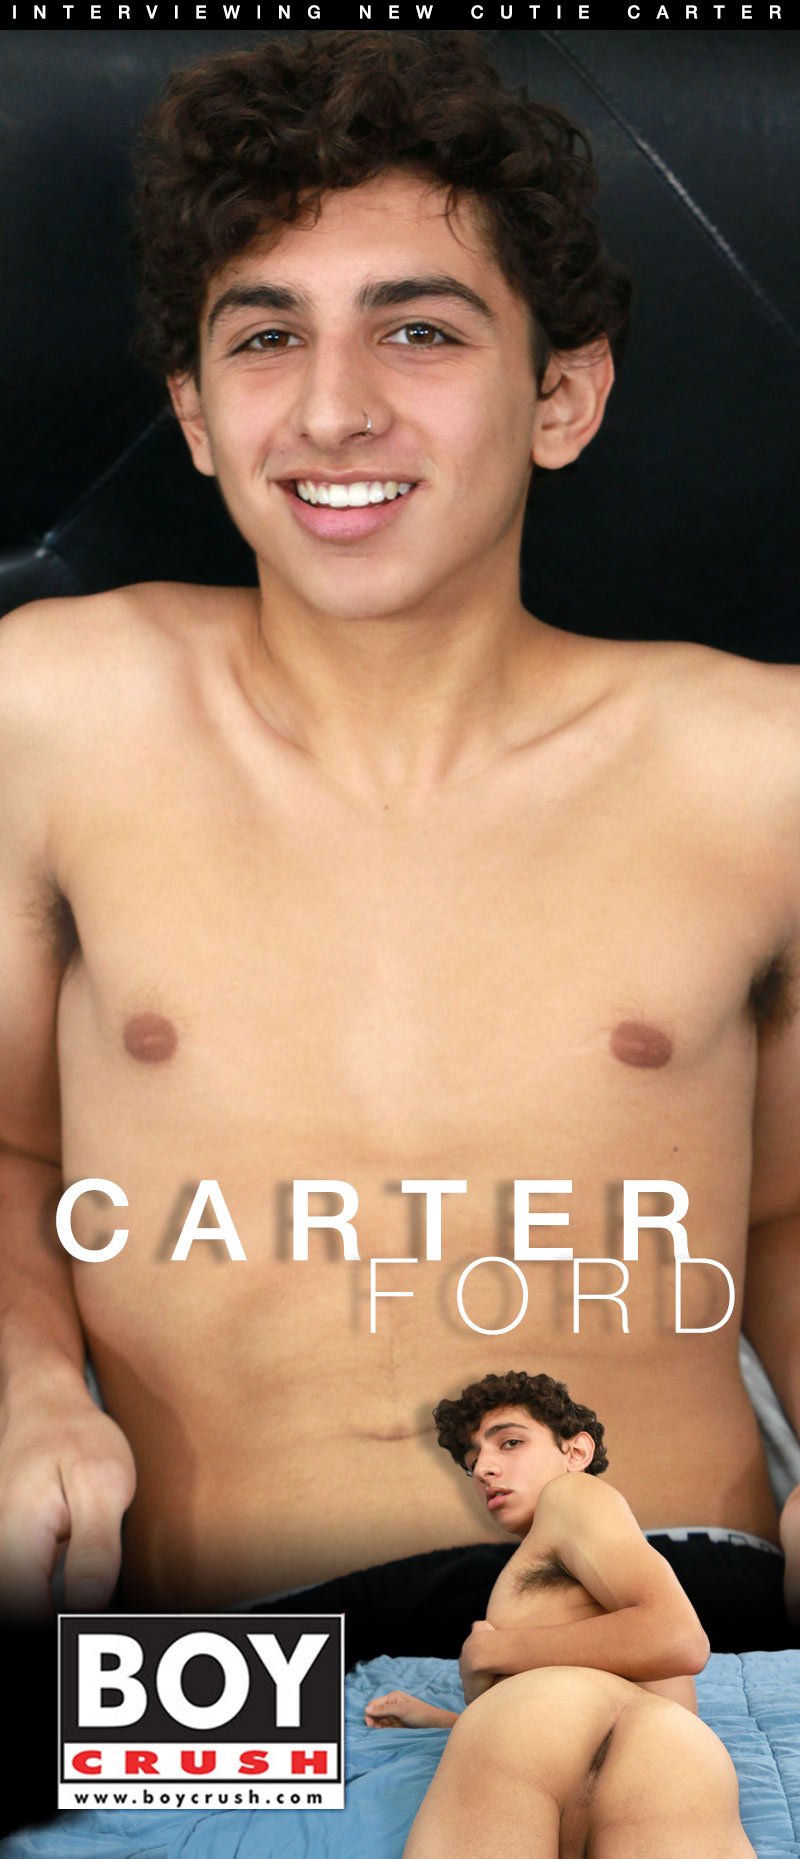 Boycrush Gay Porn 3 - BoyCrush: Carter Ford - WAYBIG